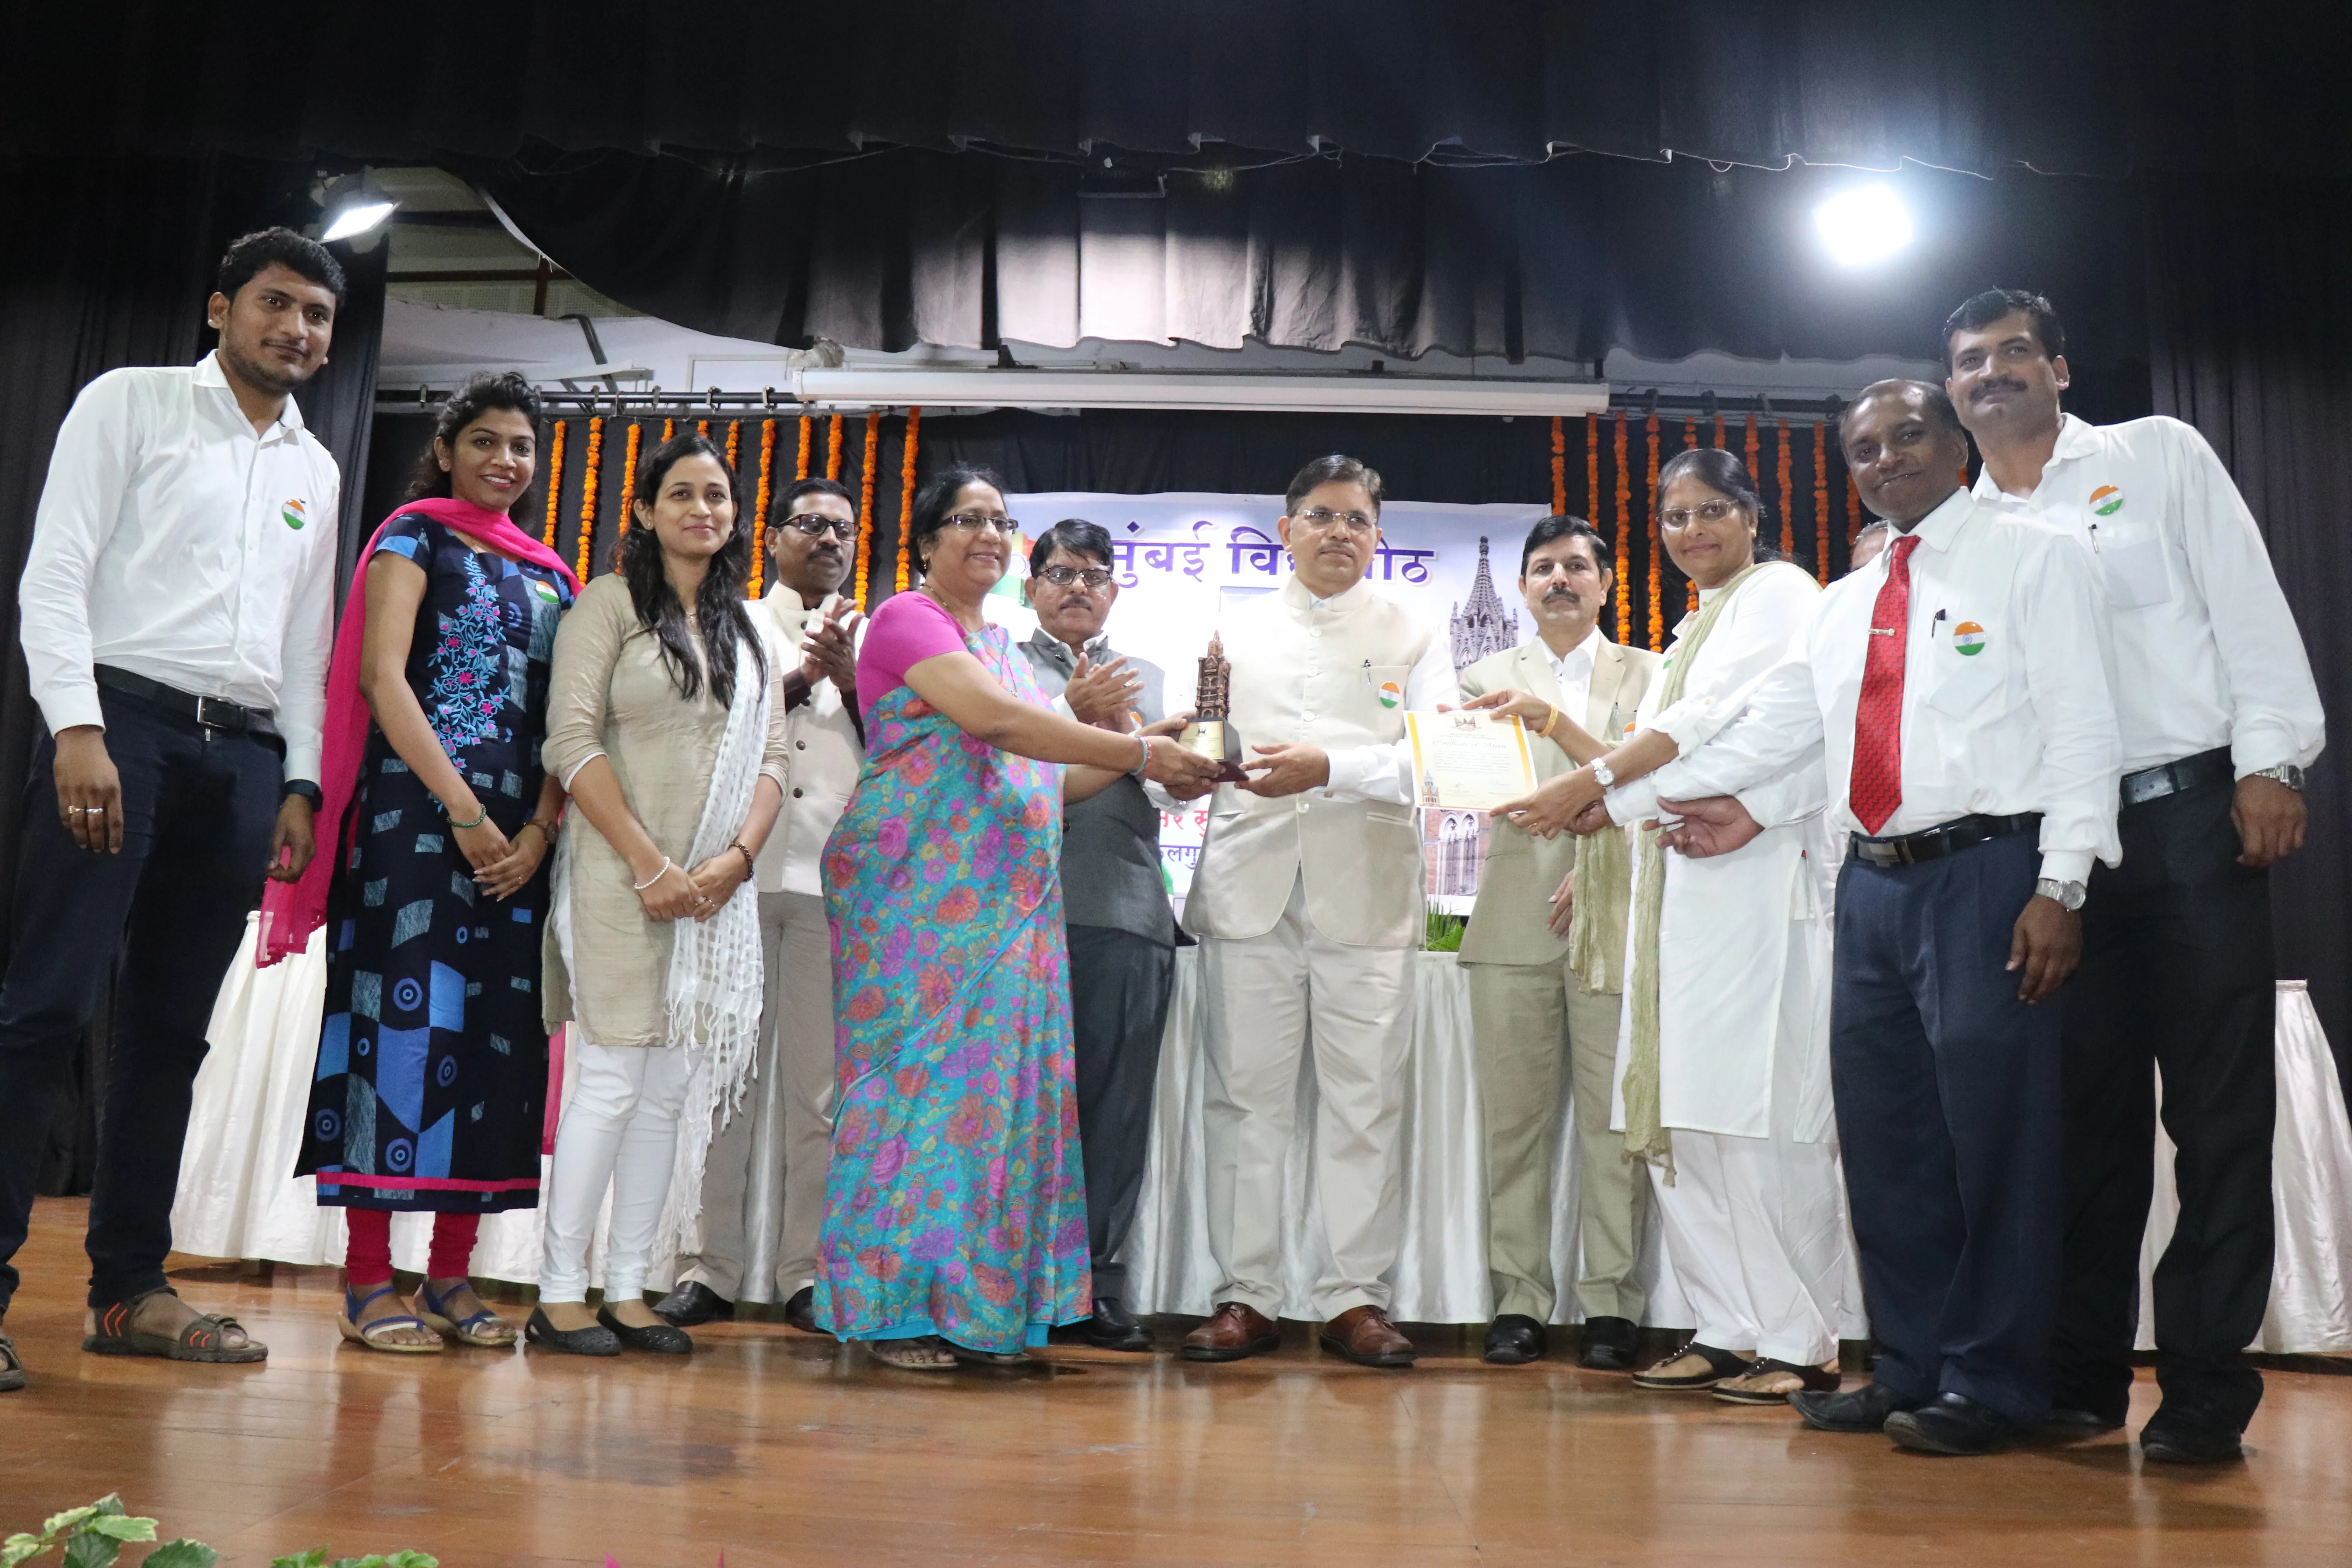 Team Avishkar receiving overall championship certificate with auspicios hads of Hon. Vice Chancellor,University of Mumbai